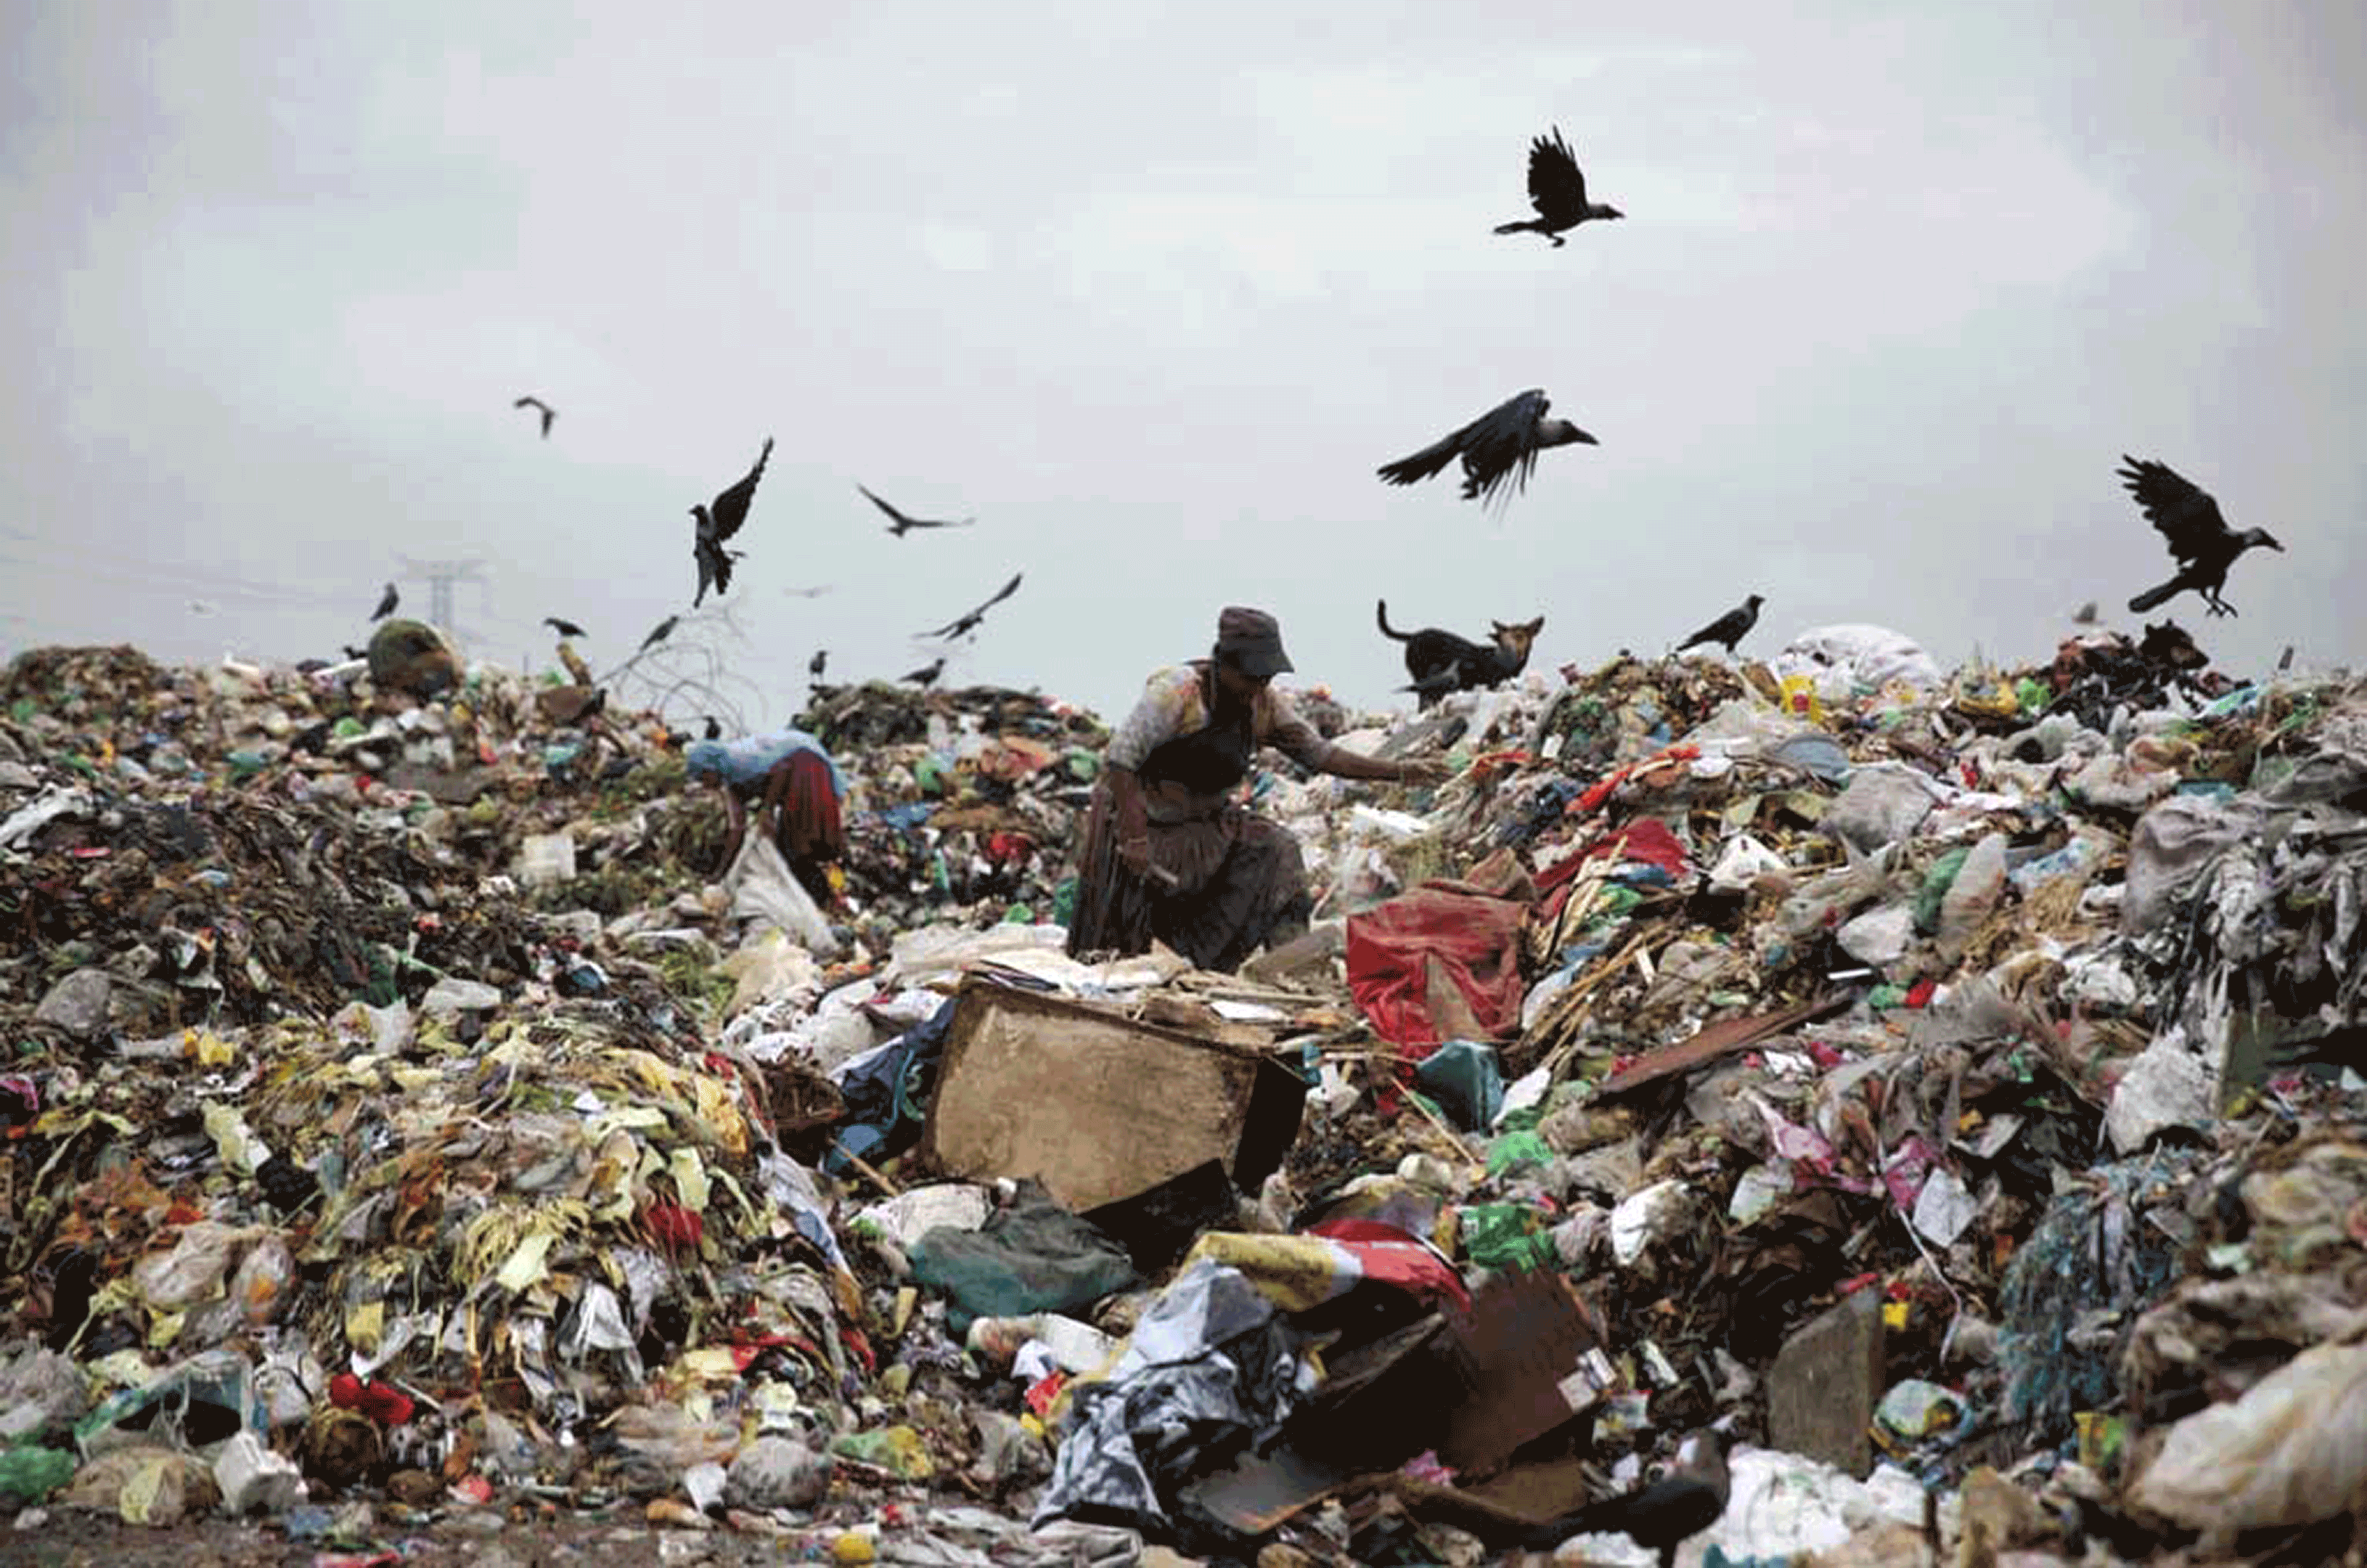 https://archive.dhakatribune.com/image-gallery/2020/11/10/in-pictures-matuail-landfill-site